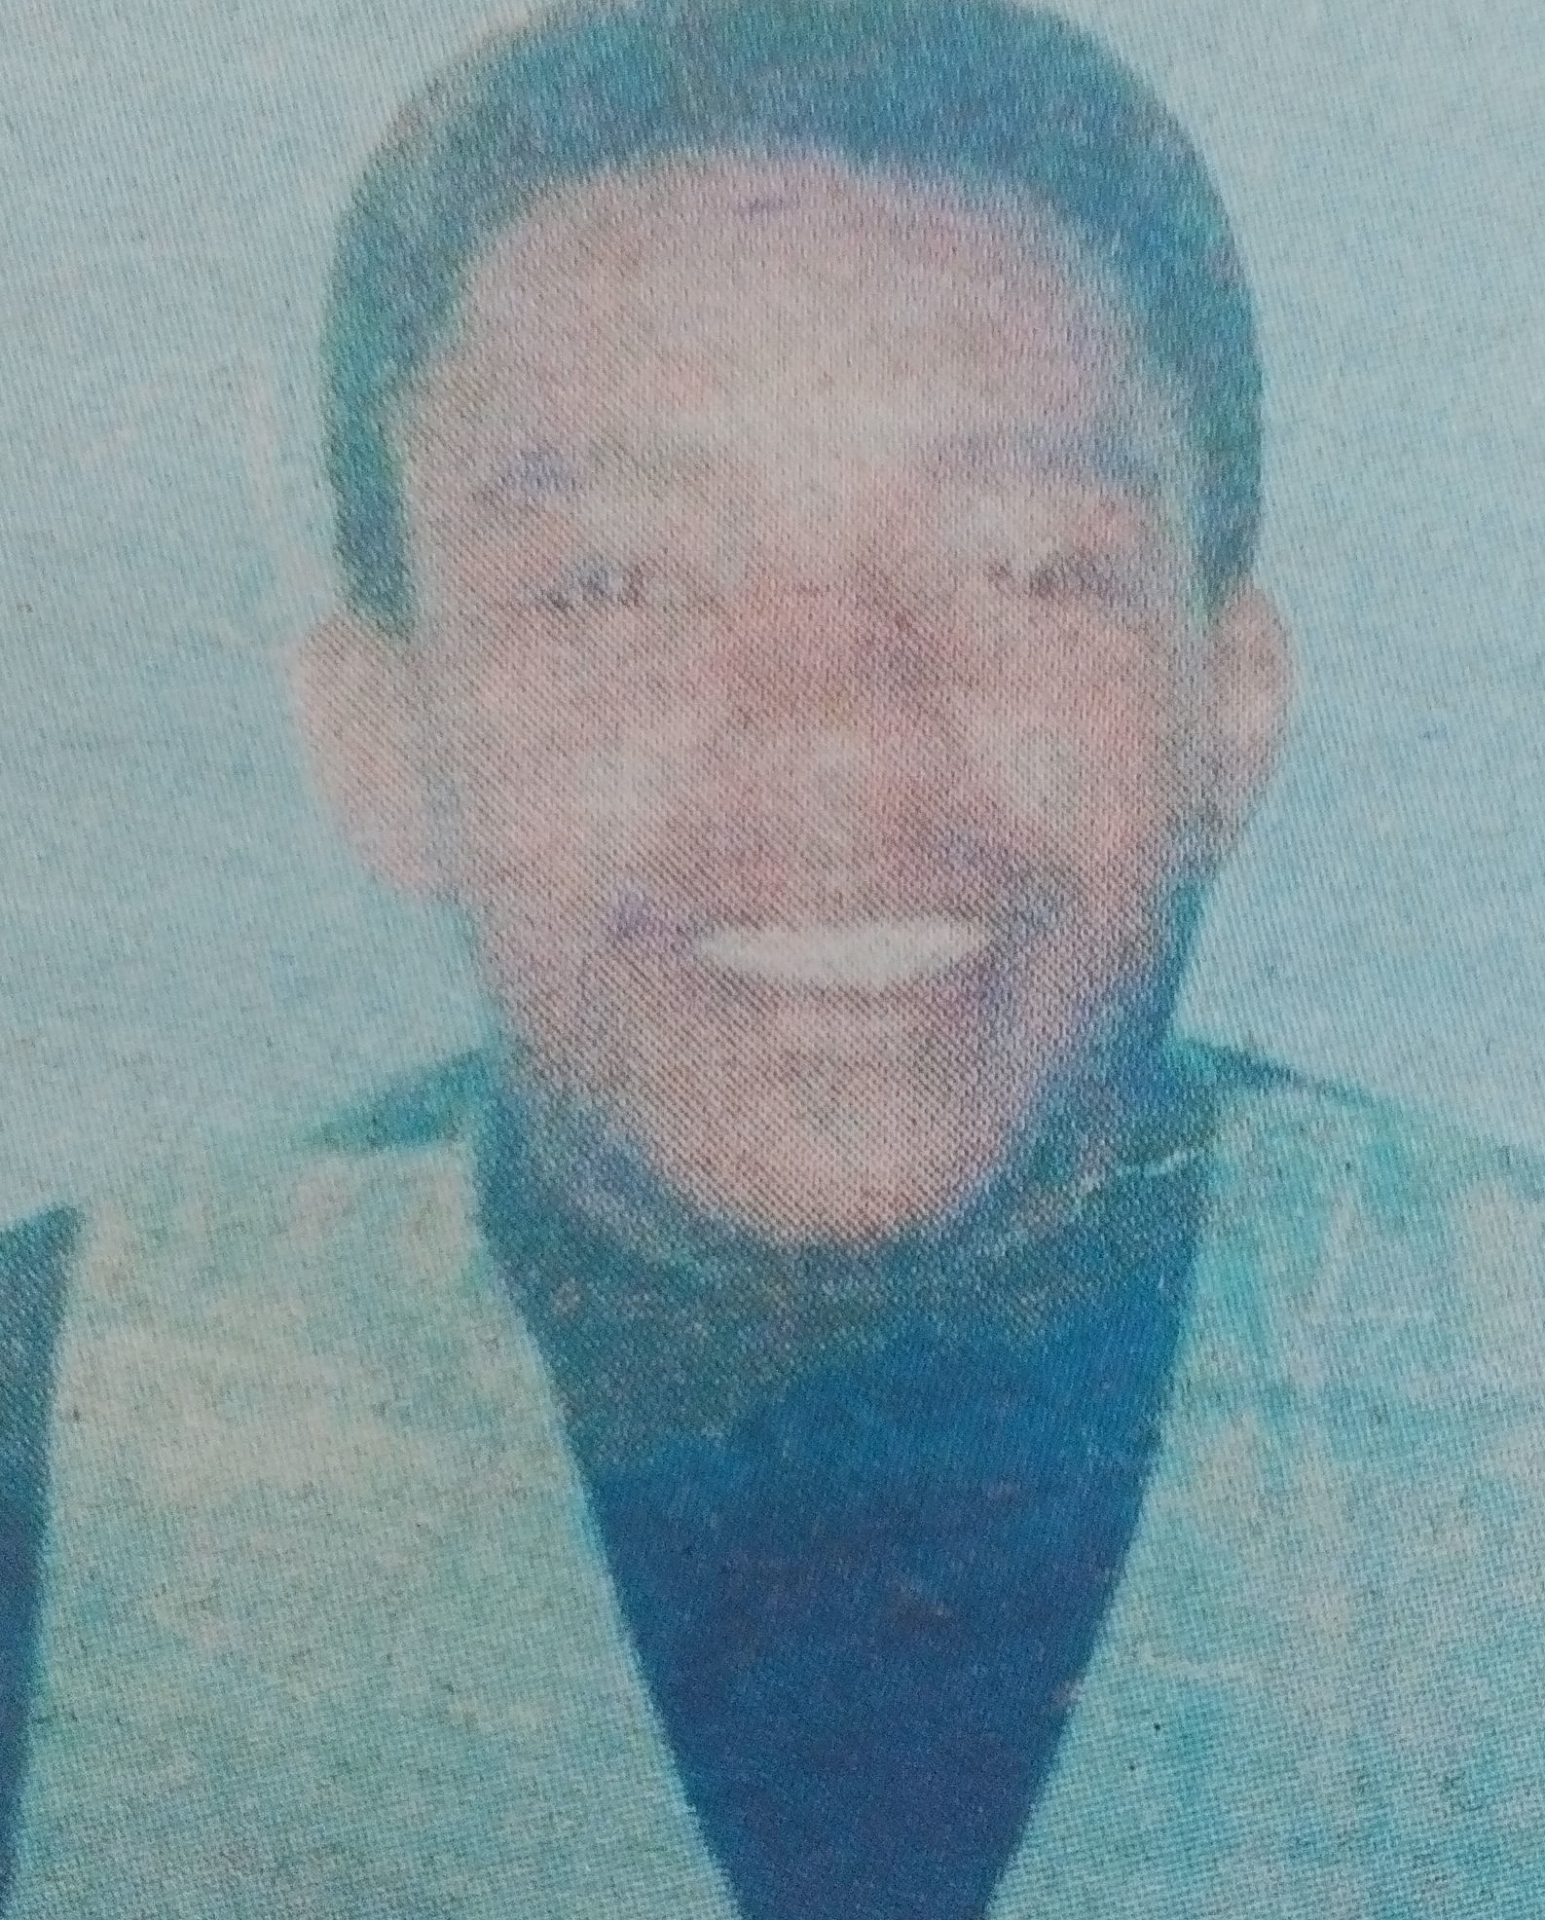 Obituary Image of Peter Ndwiga Njerenga